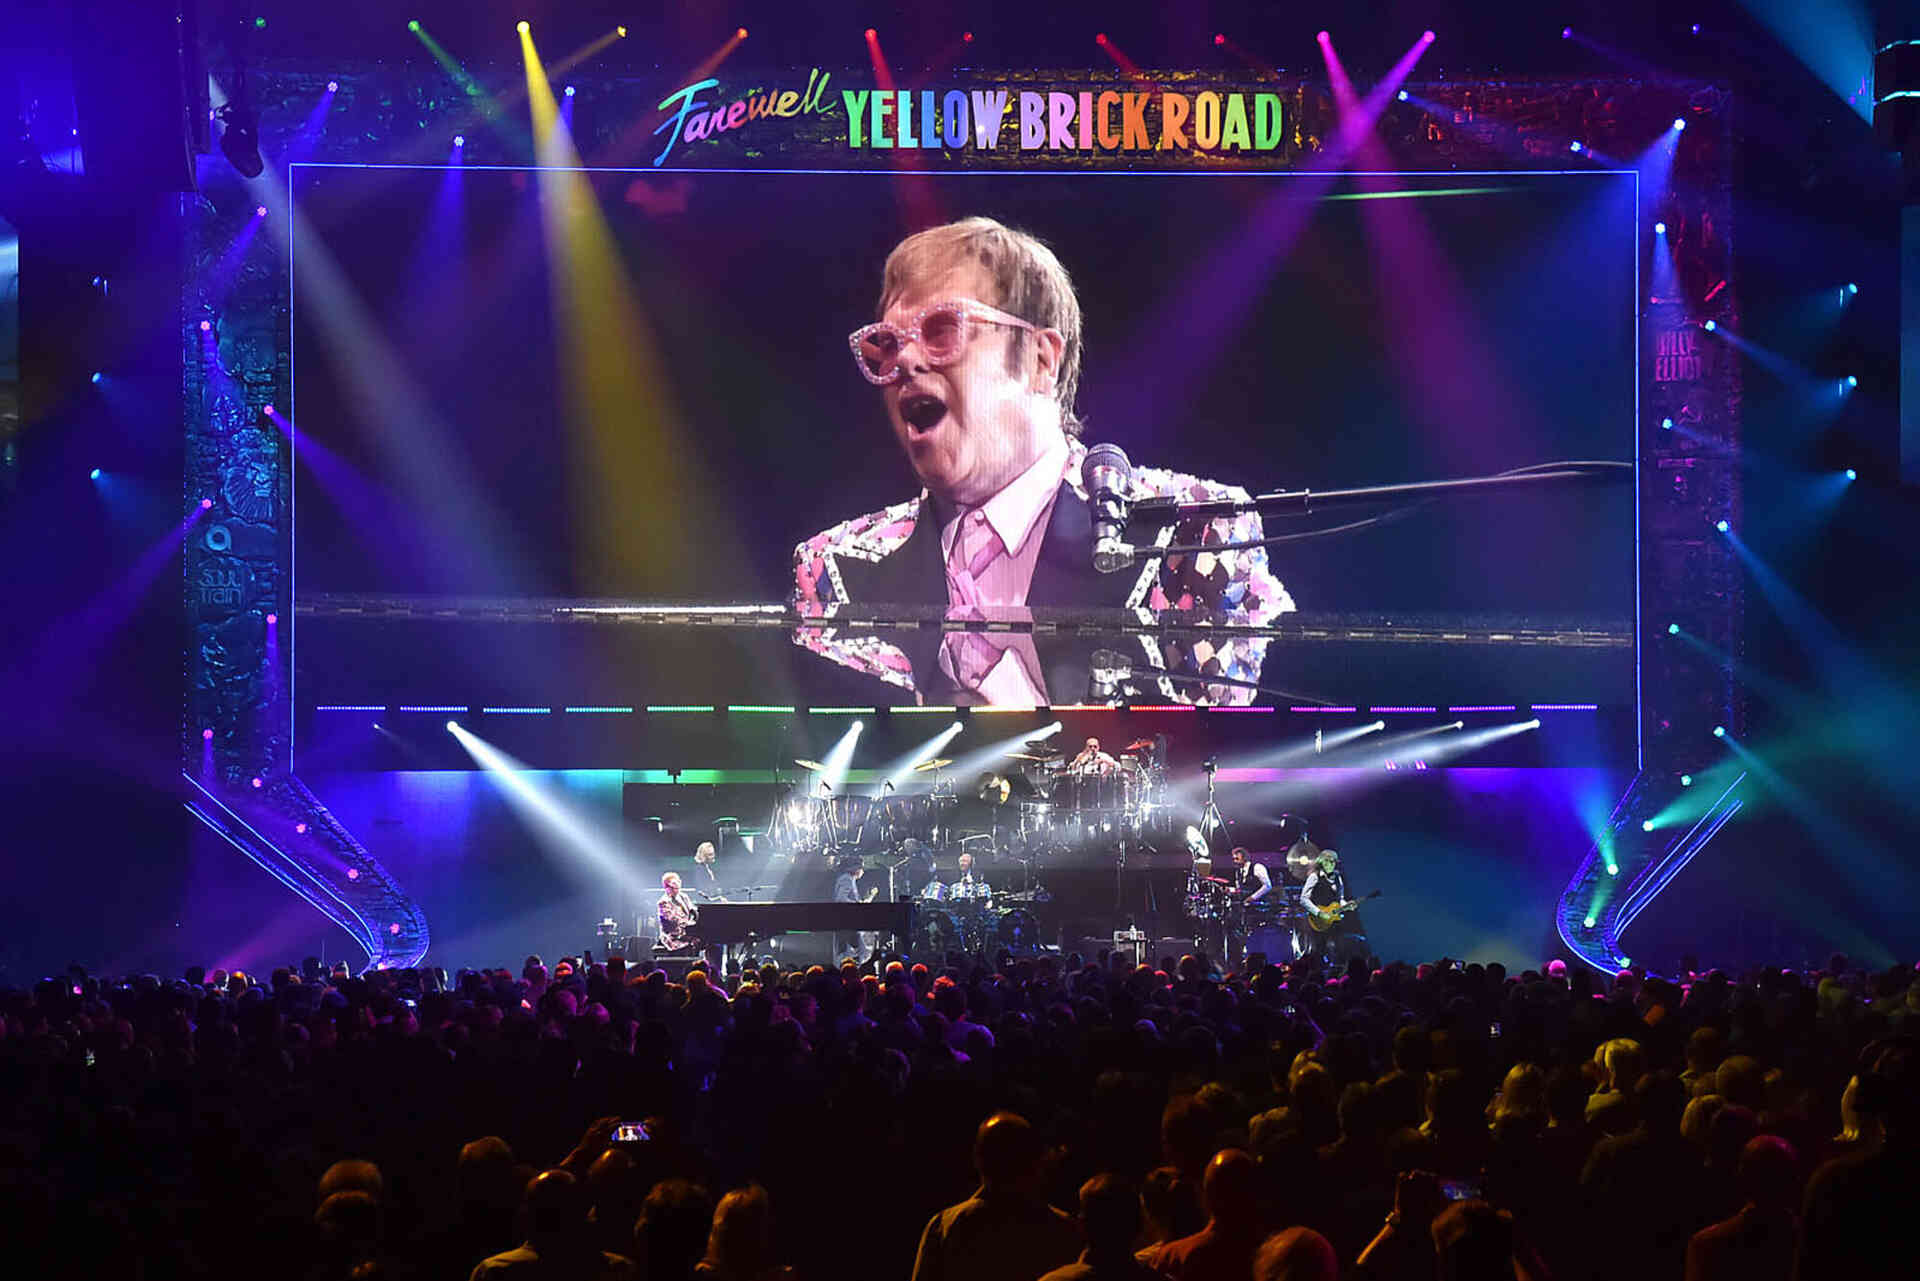 Farewell Yellow Brick Road Will this tour be the Elton John's last